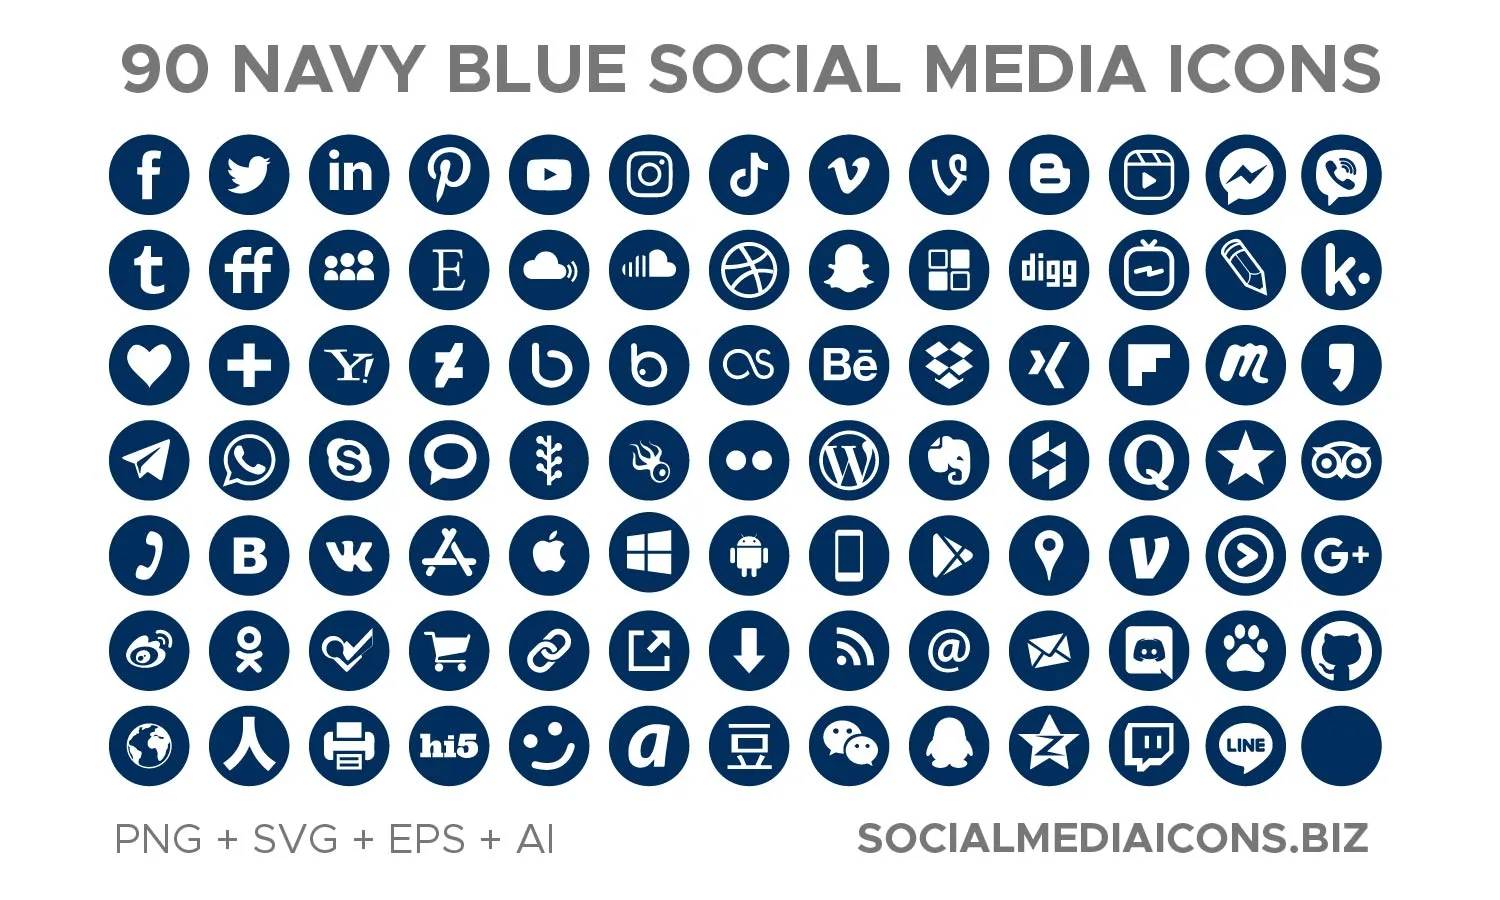 Navy round square social media icons - ready to use